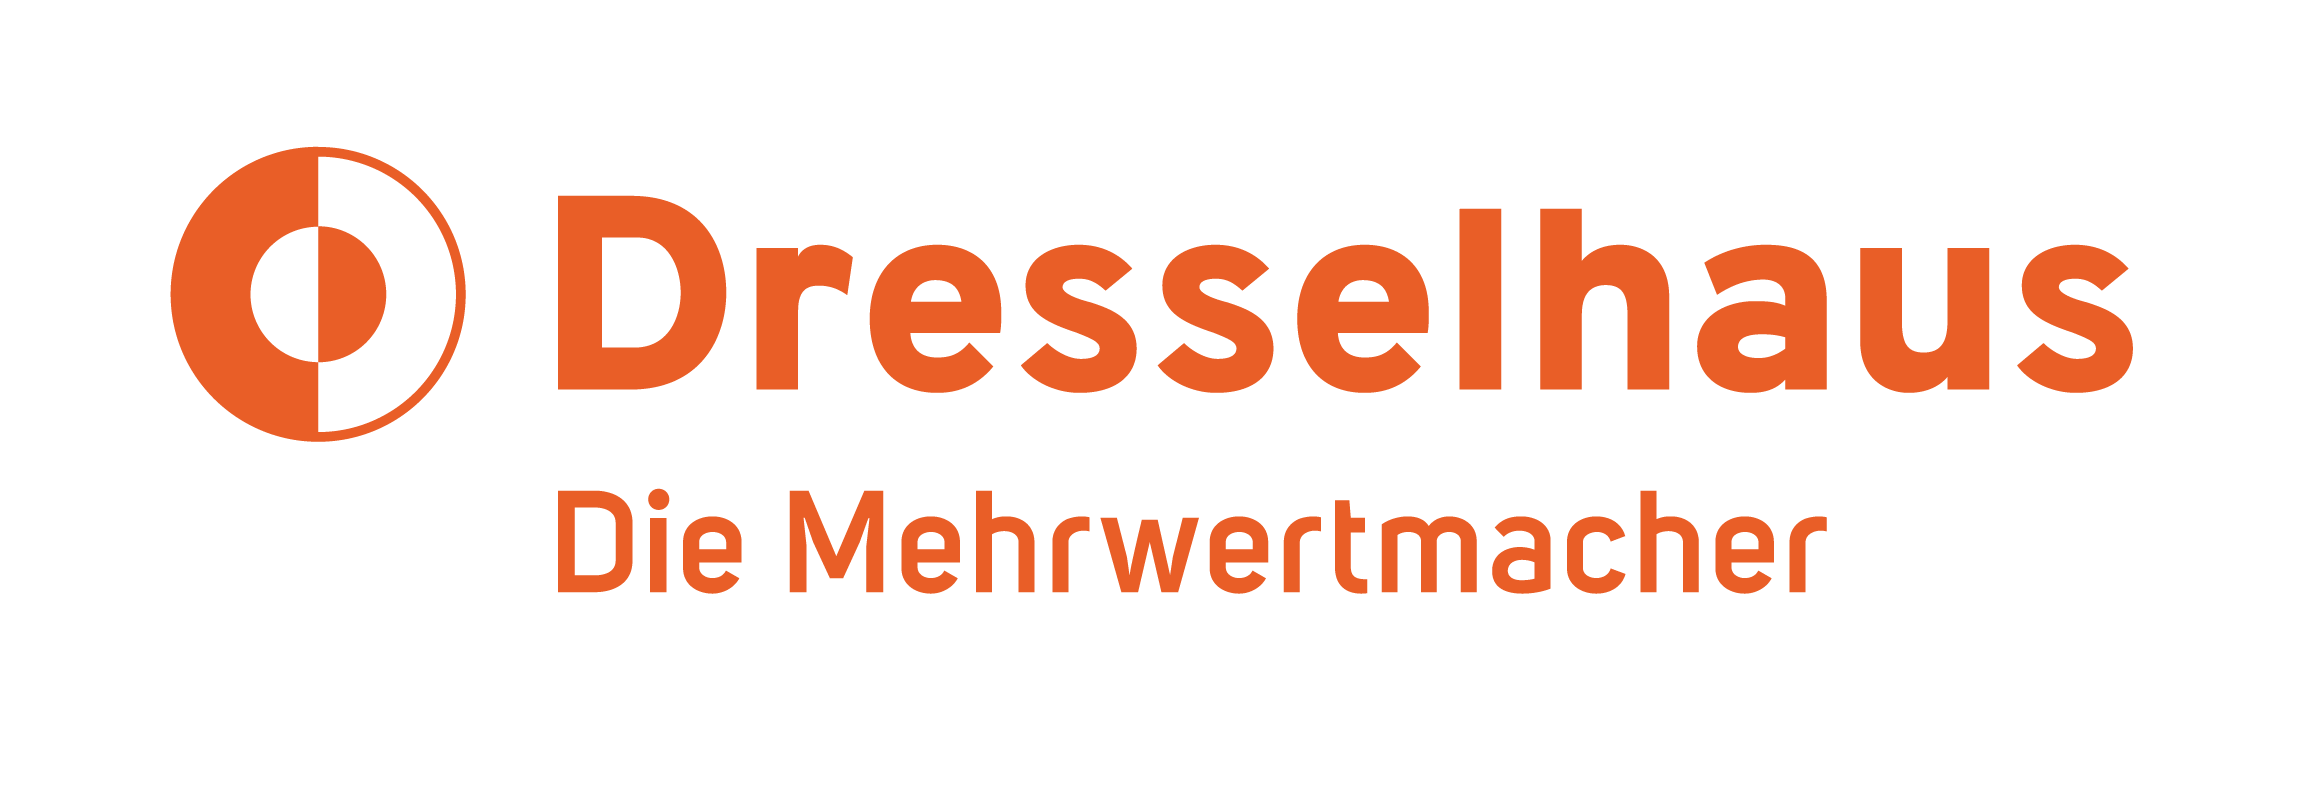 File:Dresselhaus Logo Claim.png - Wikimedia Commons